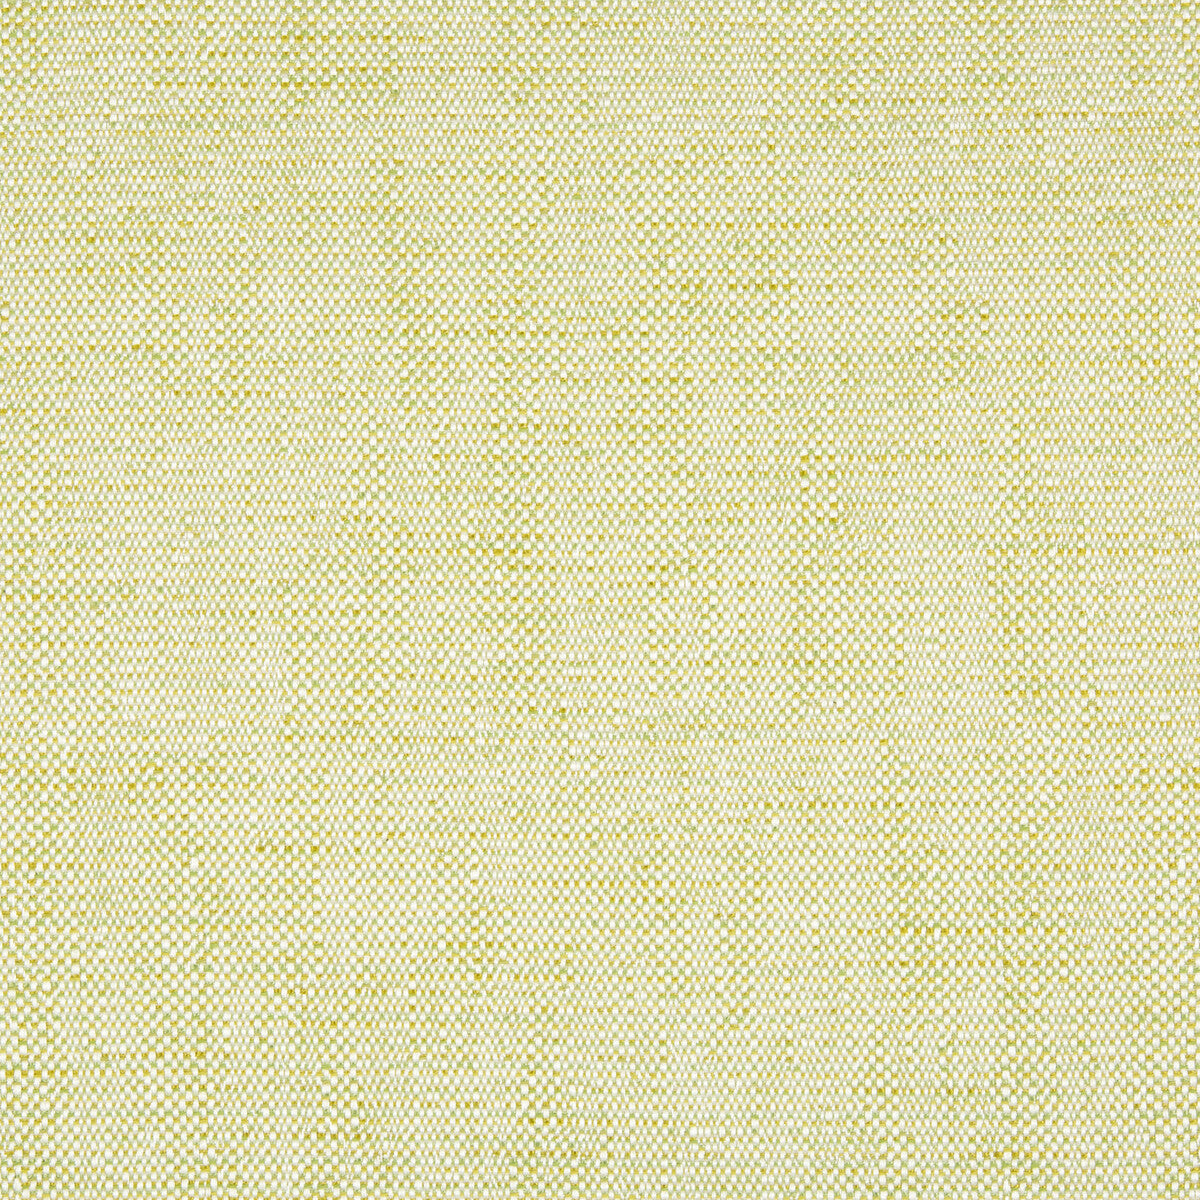 Kravet Design fabric in 34774-23 color - pattern 34774.23.0 - by Kravet Design in the Gis collection